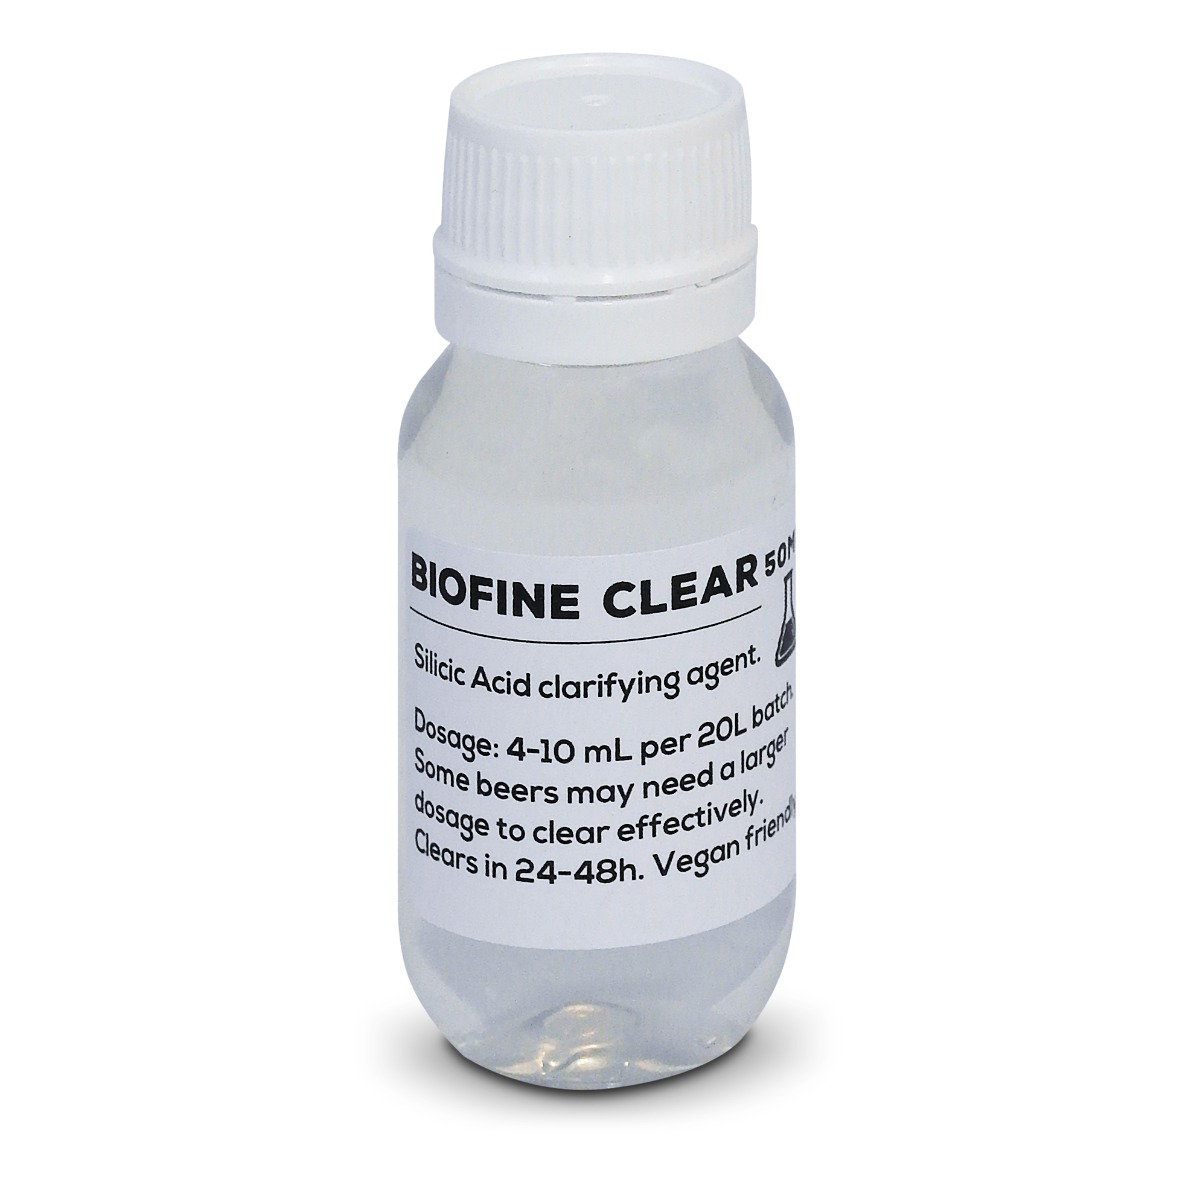 Biofine Clear 50mL